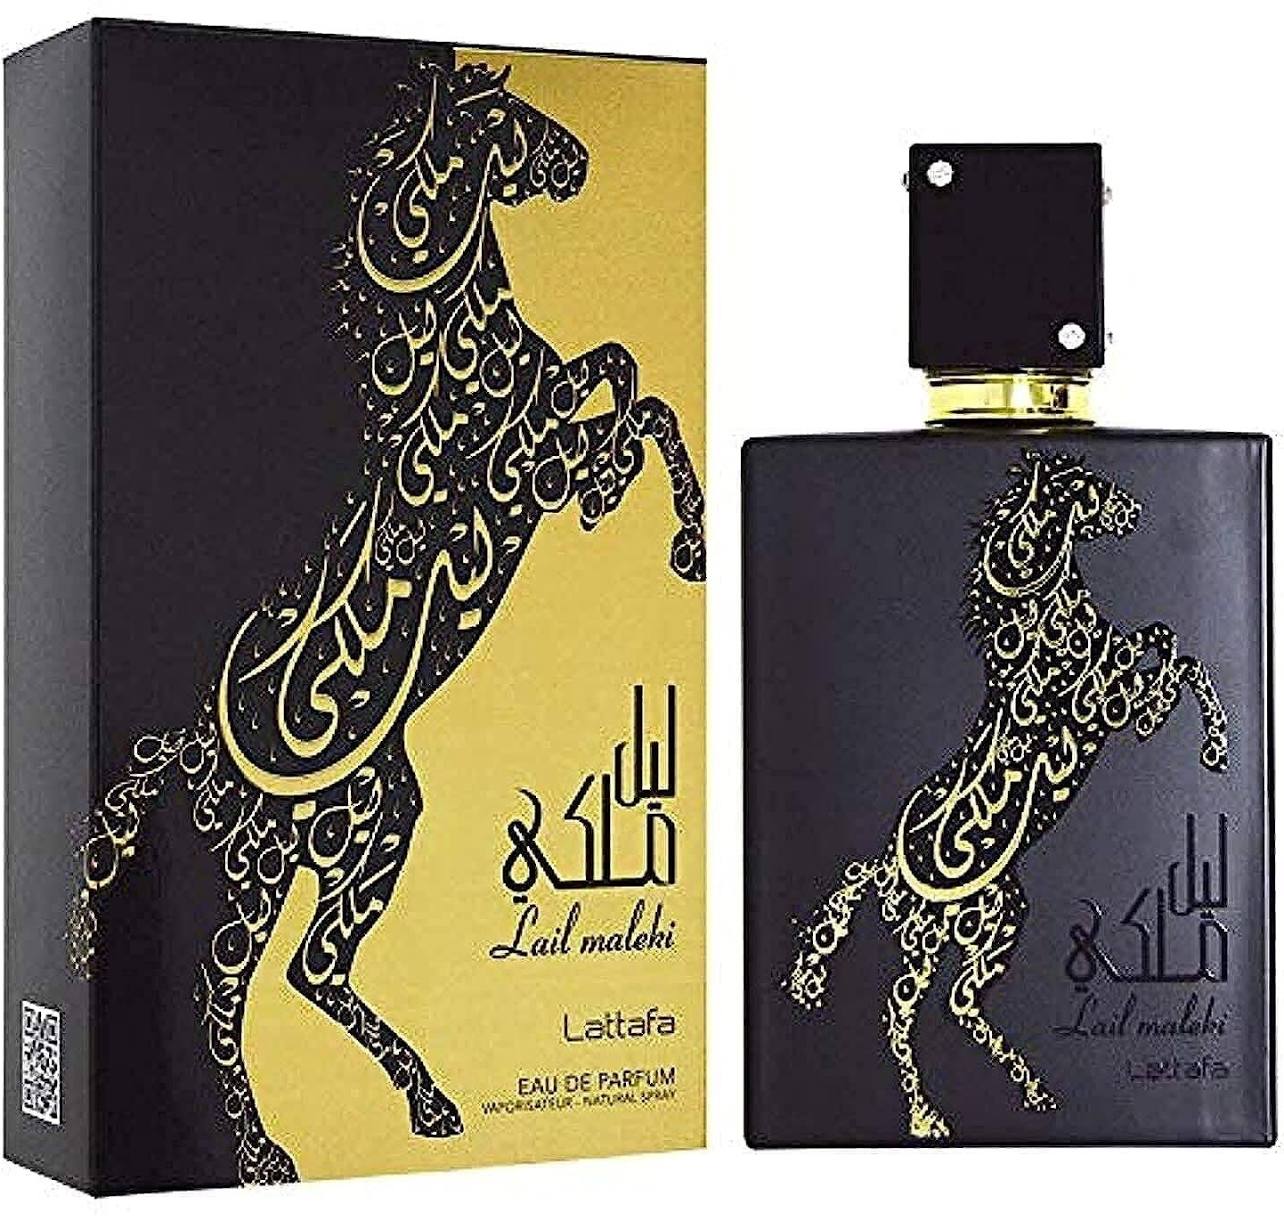 Lail Maleki Lattafa Perfumes - Dubai Esencias